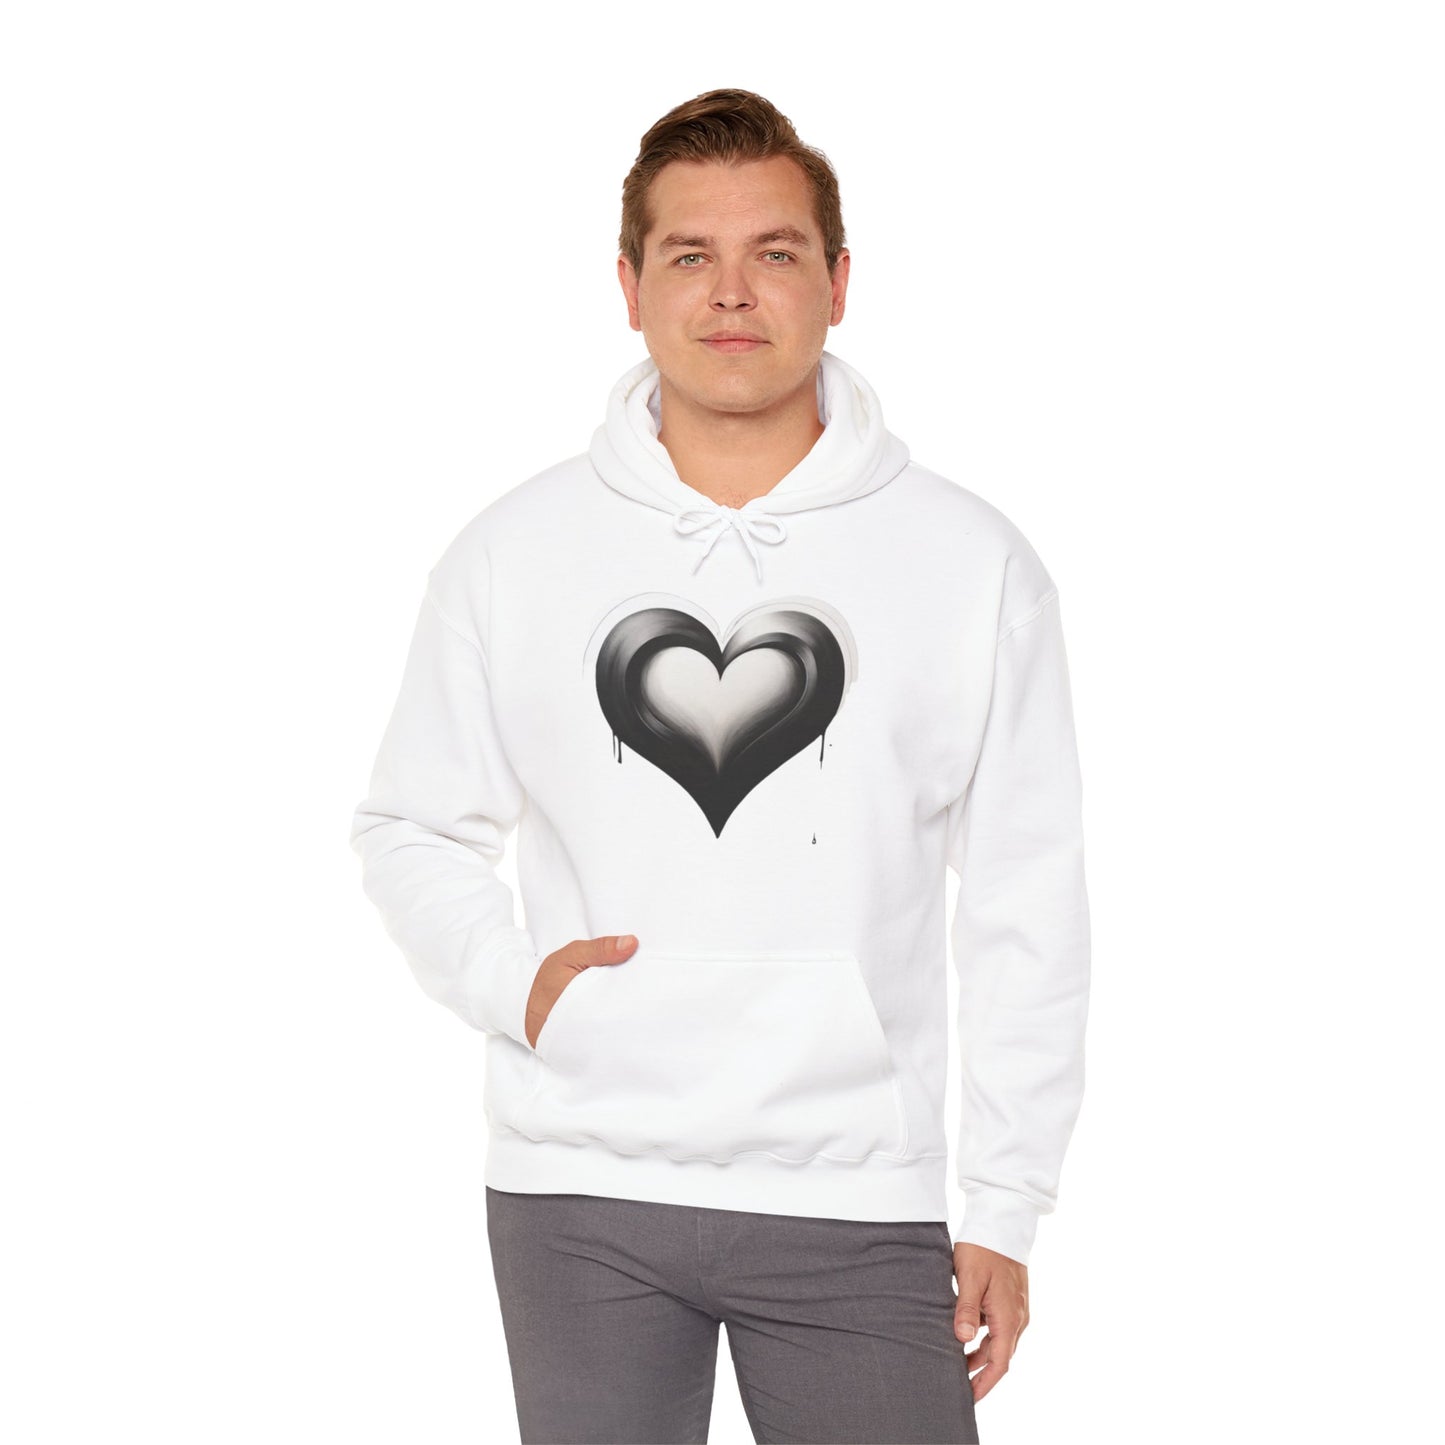 Black and White Heart - Unisex Hooded Sweatshirt